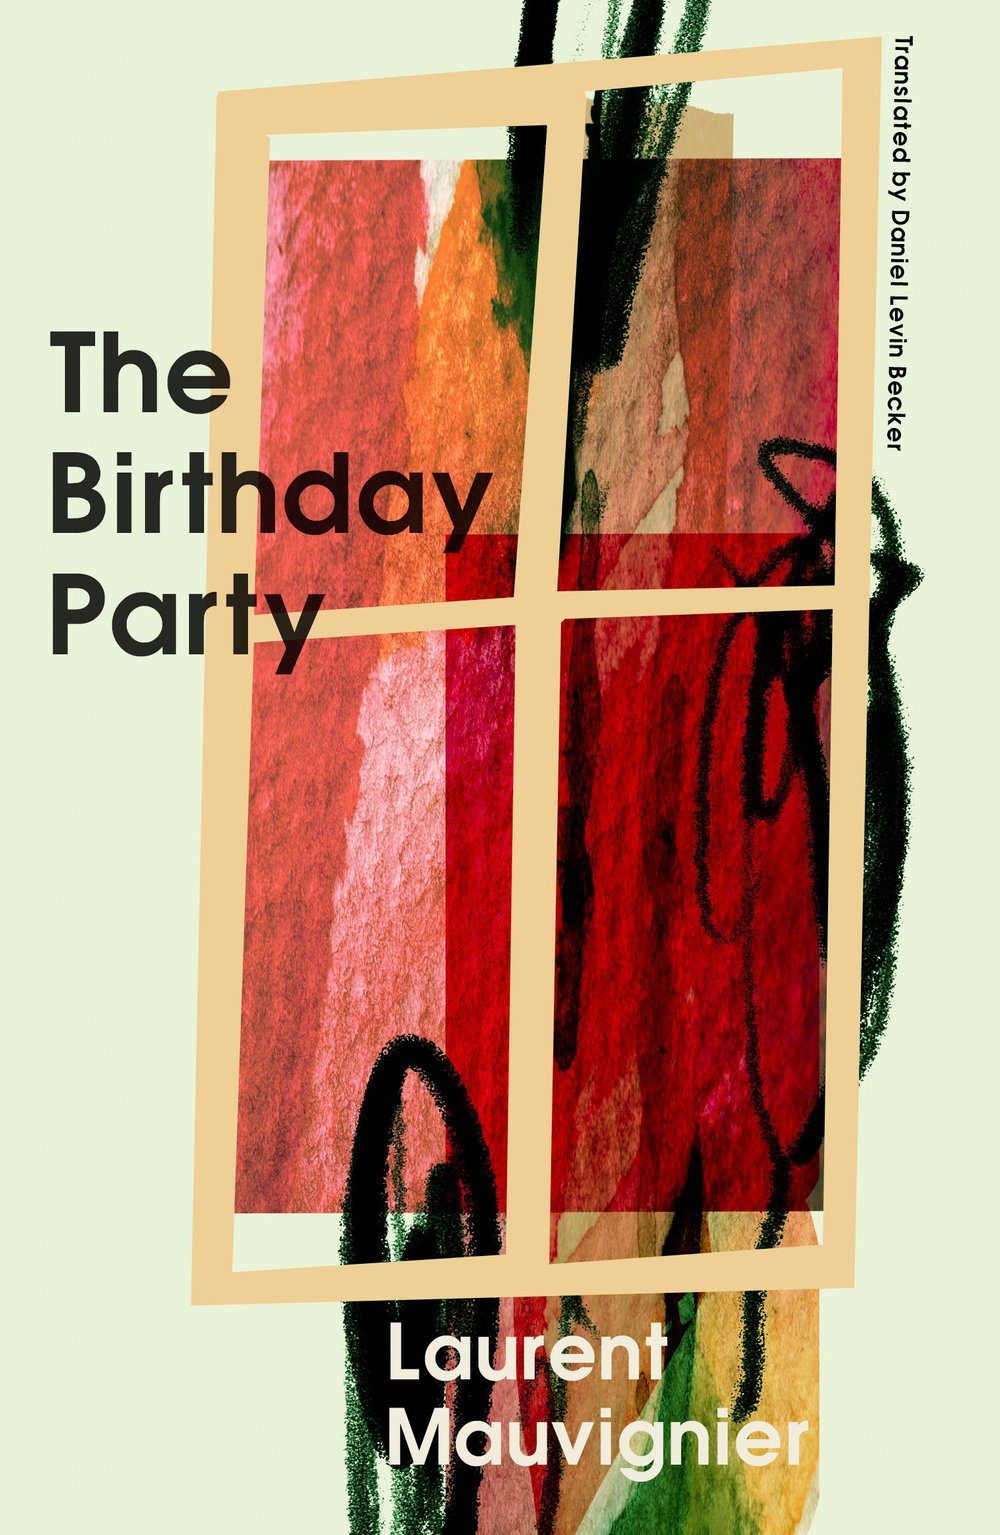 Transit Books — The Birthday Party